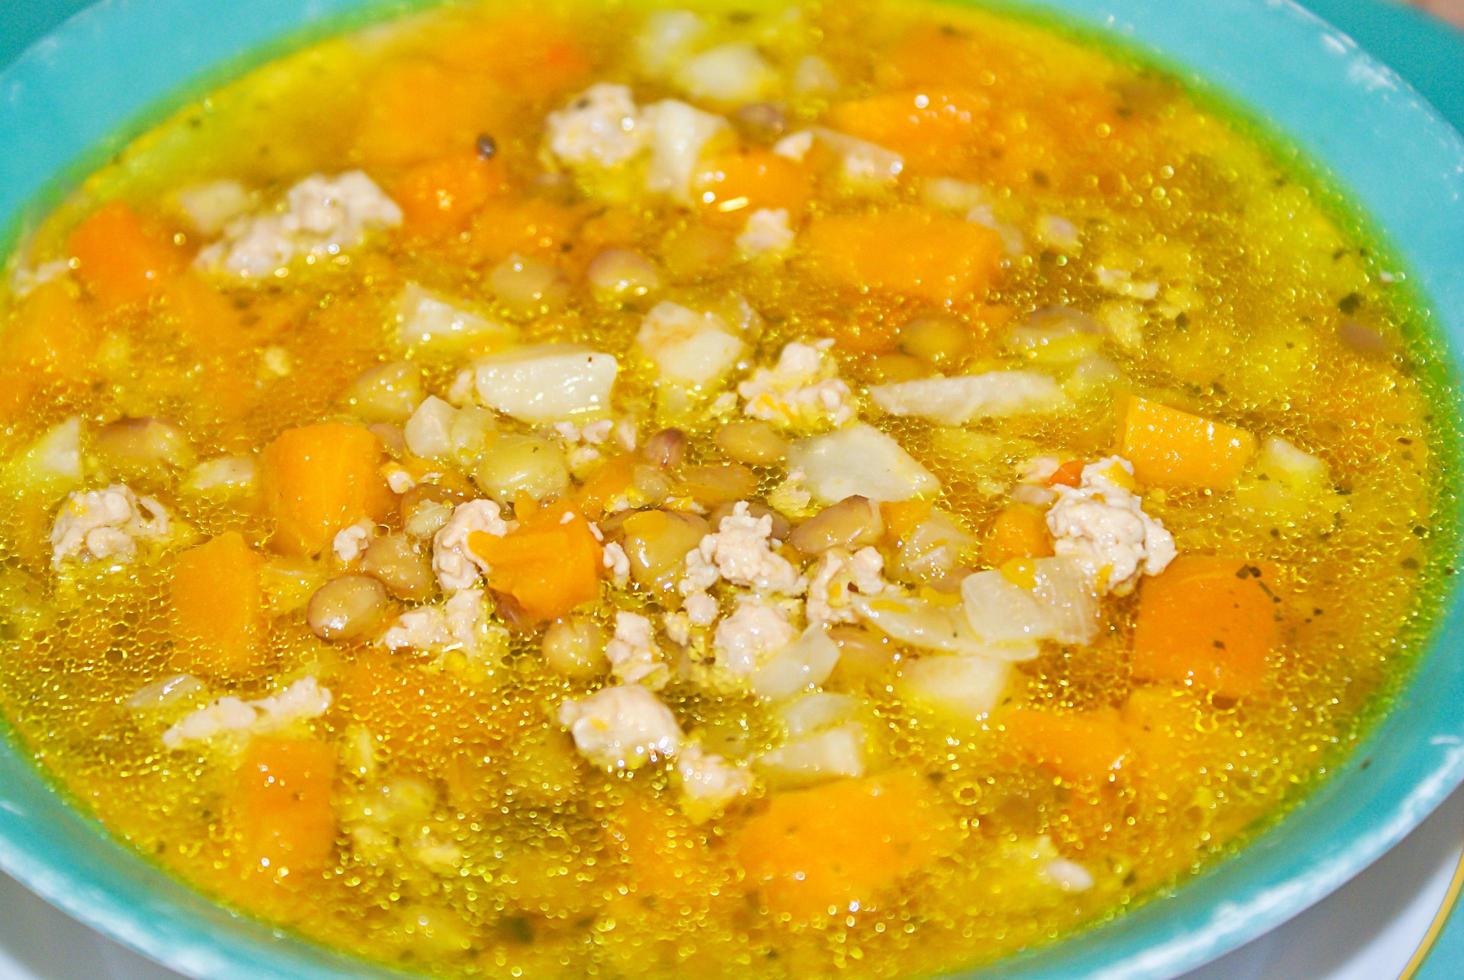 Pumpkin Soup Dietary Cuisine photo